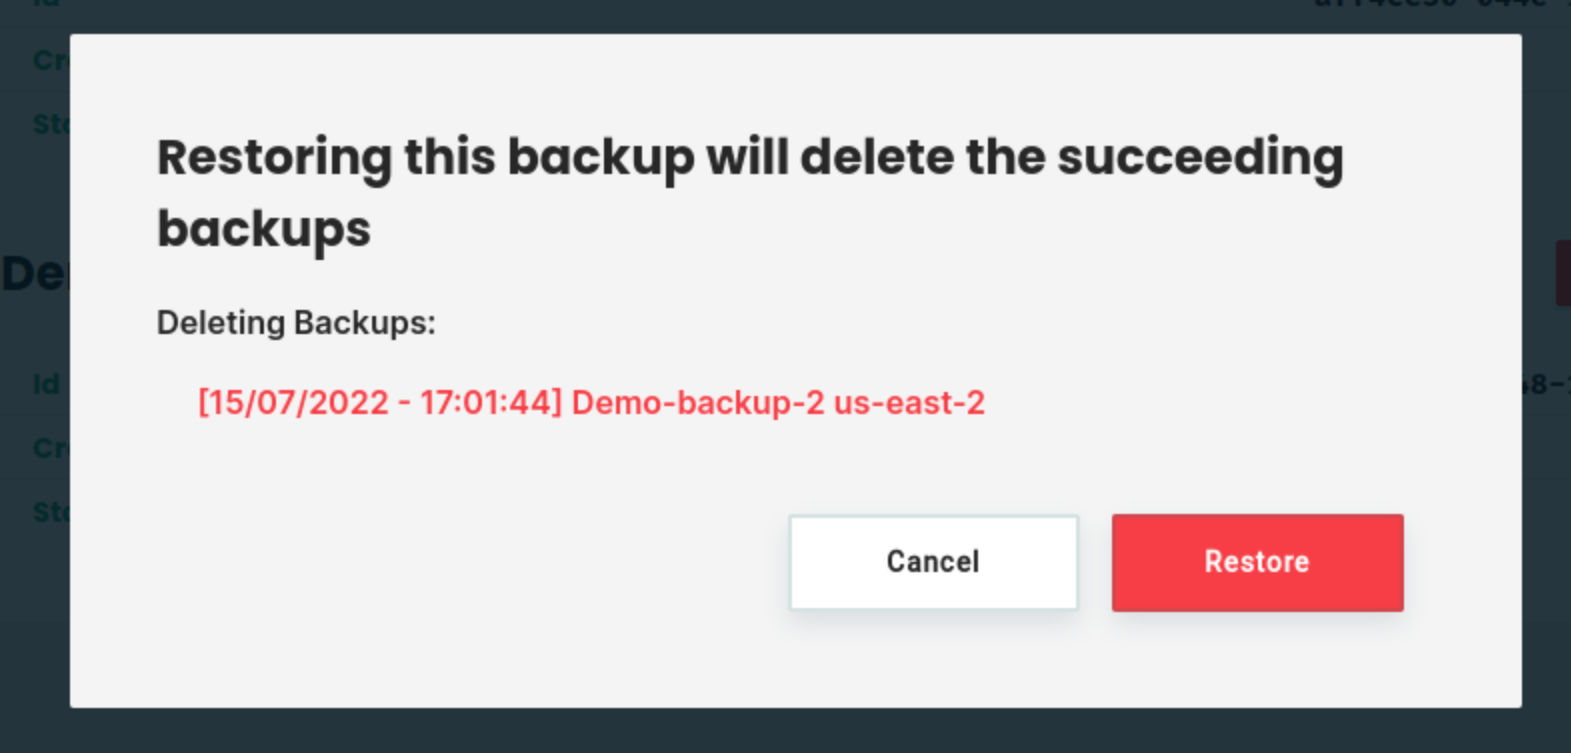 Delete succeding backups